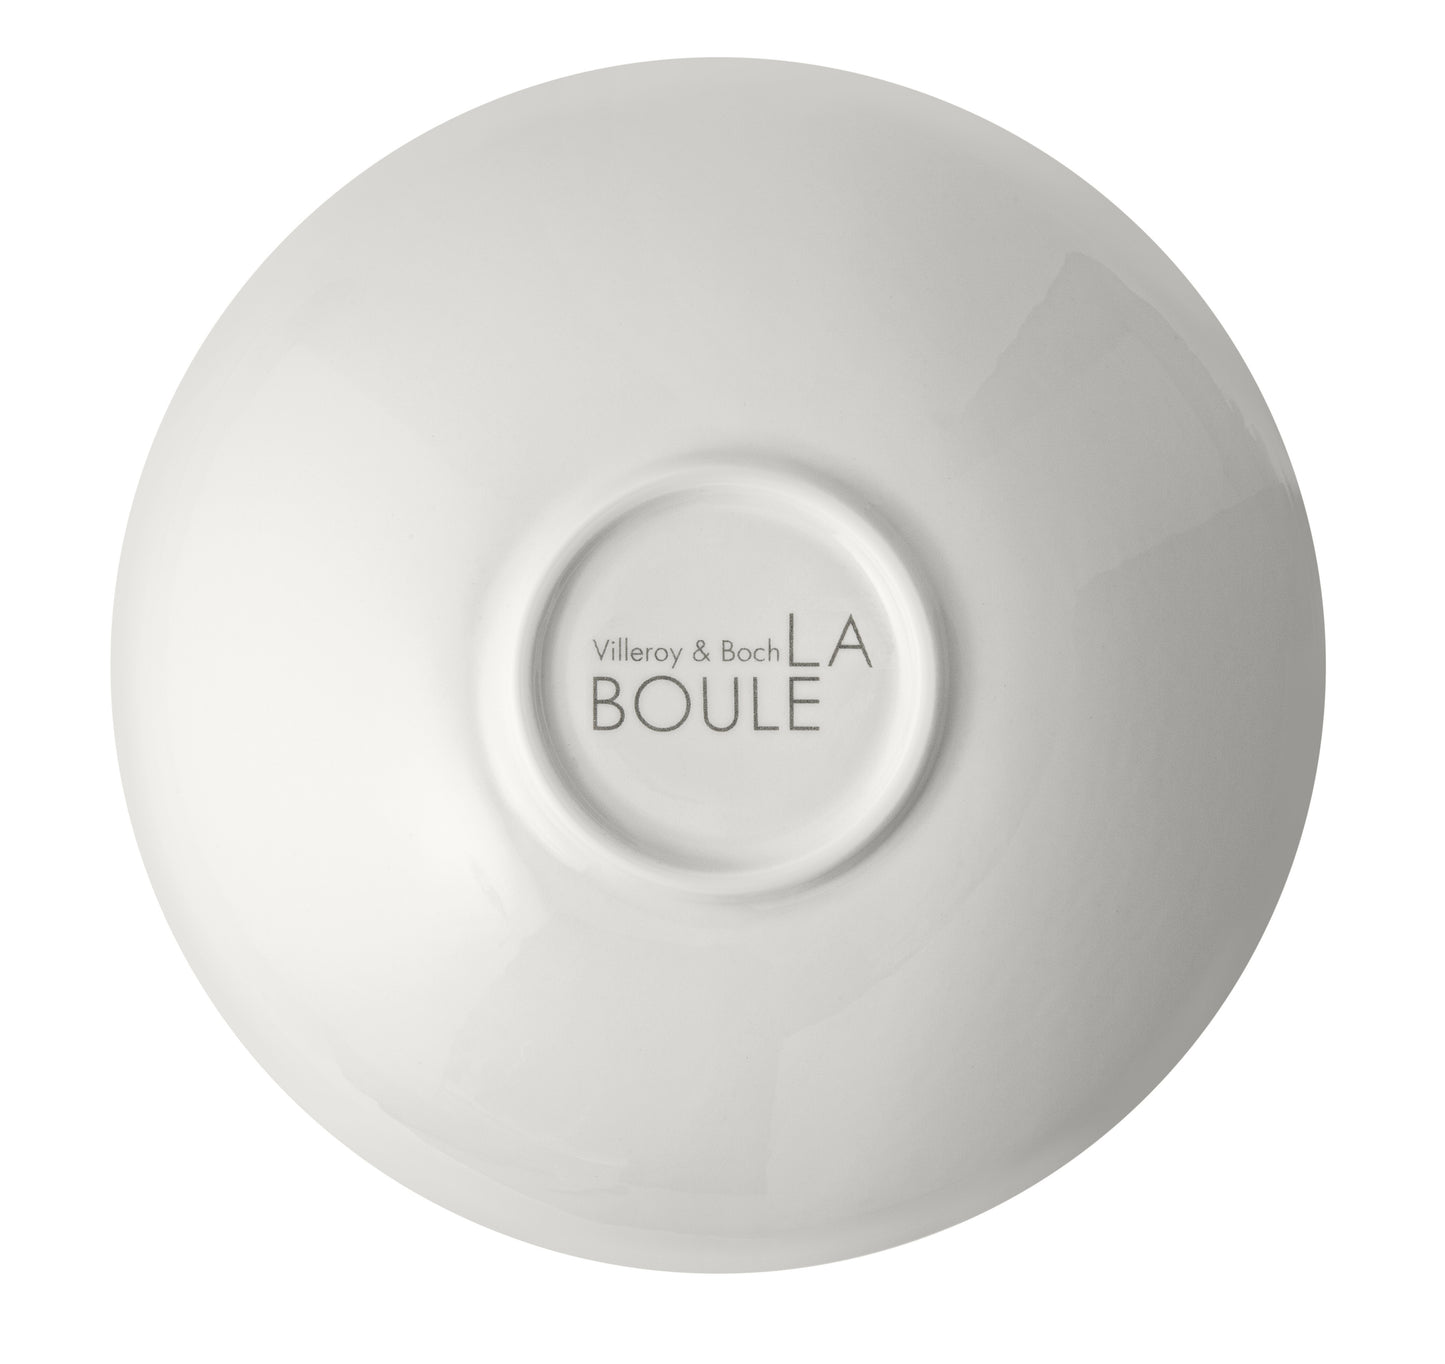 Iconic La Boule White